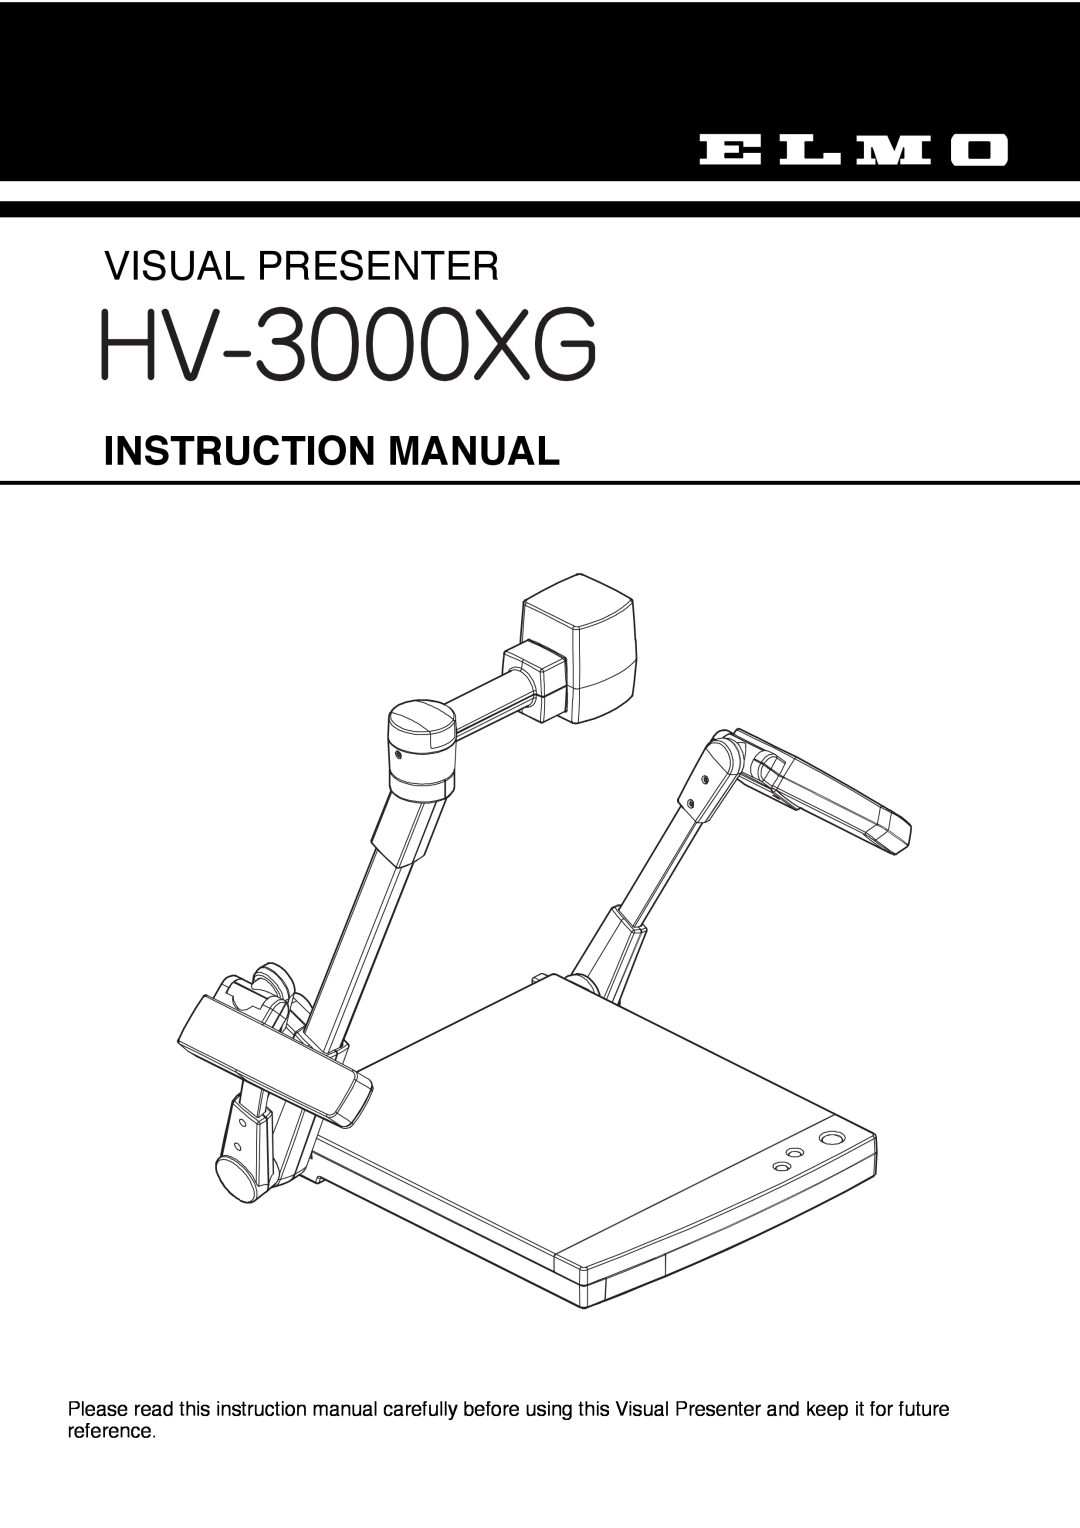 Elmo HV-3000XG instruction manual Visual Presenter, Instruction Manual 